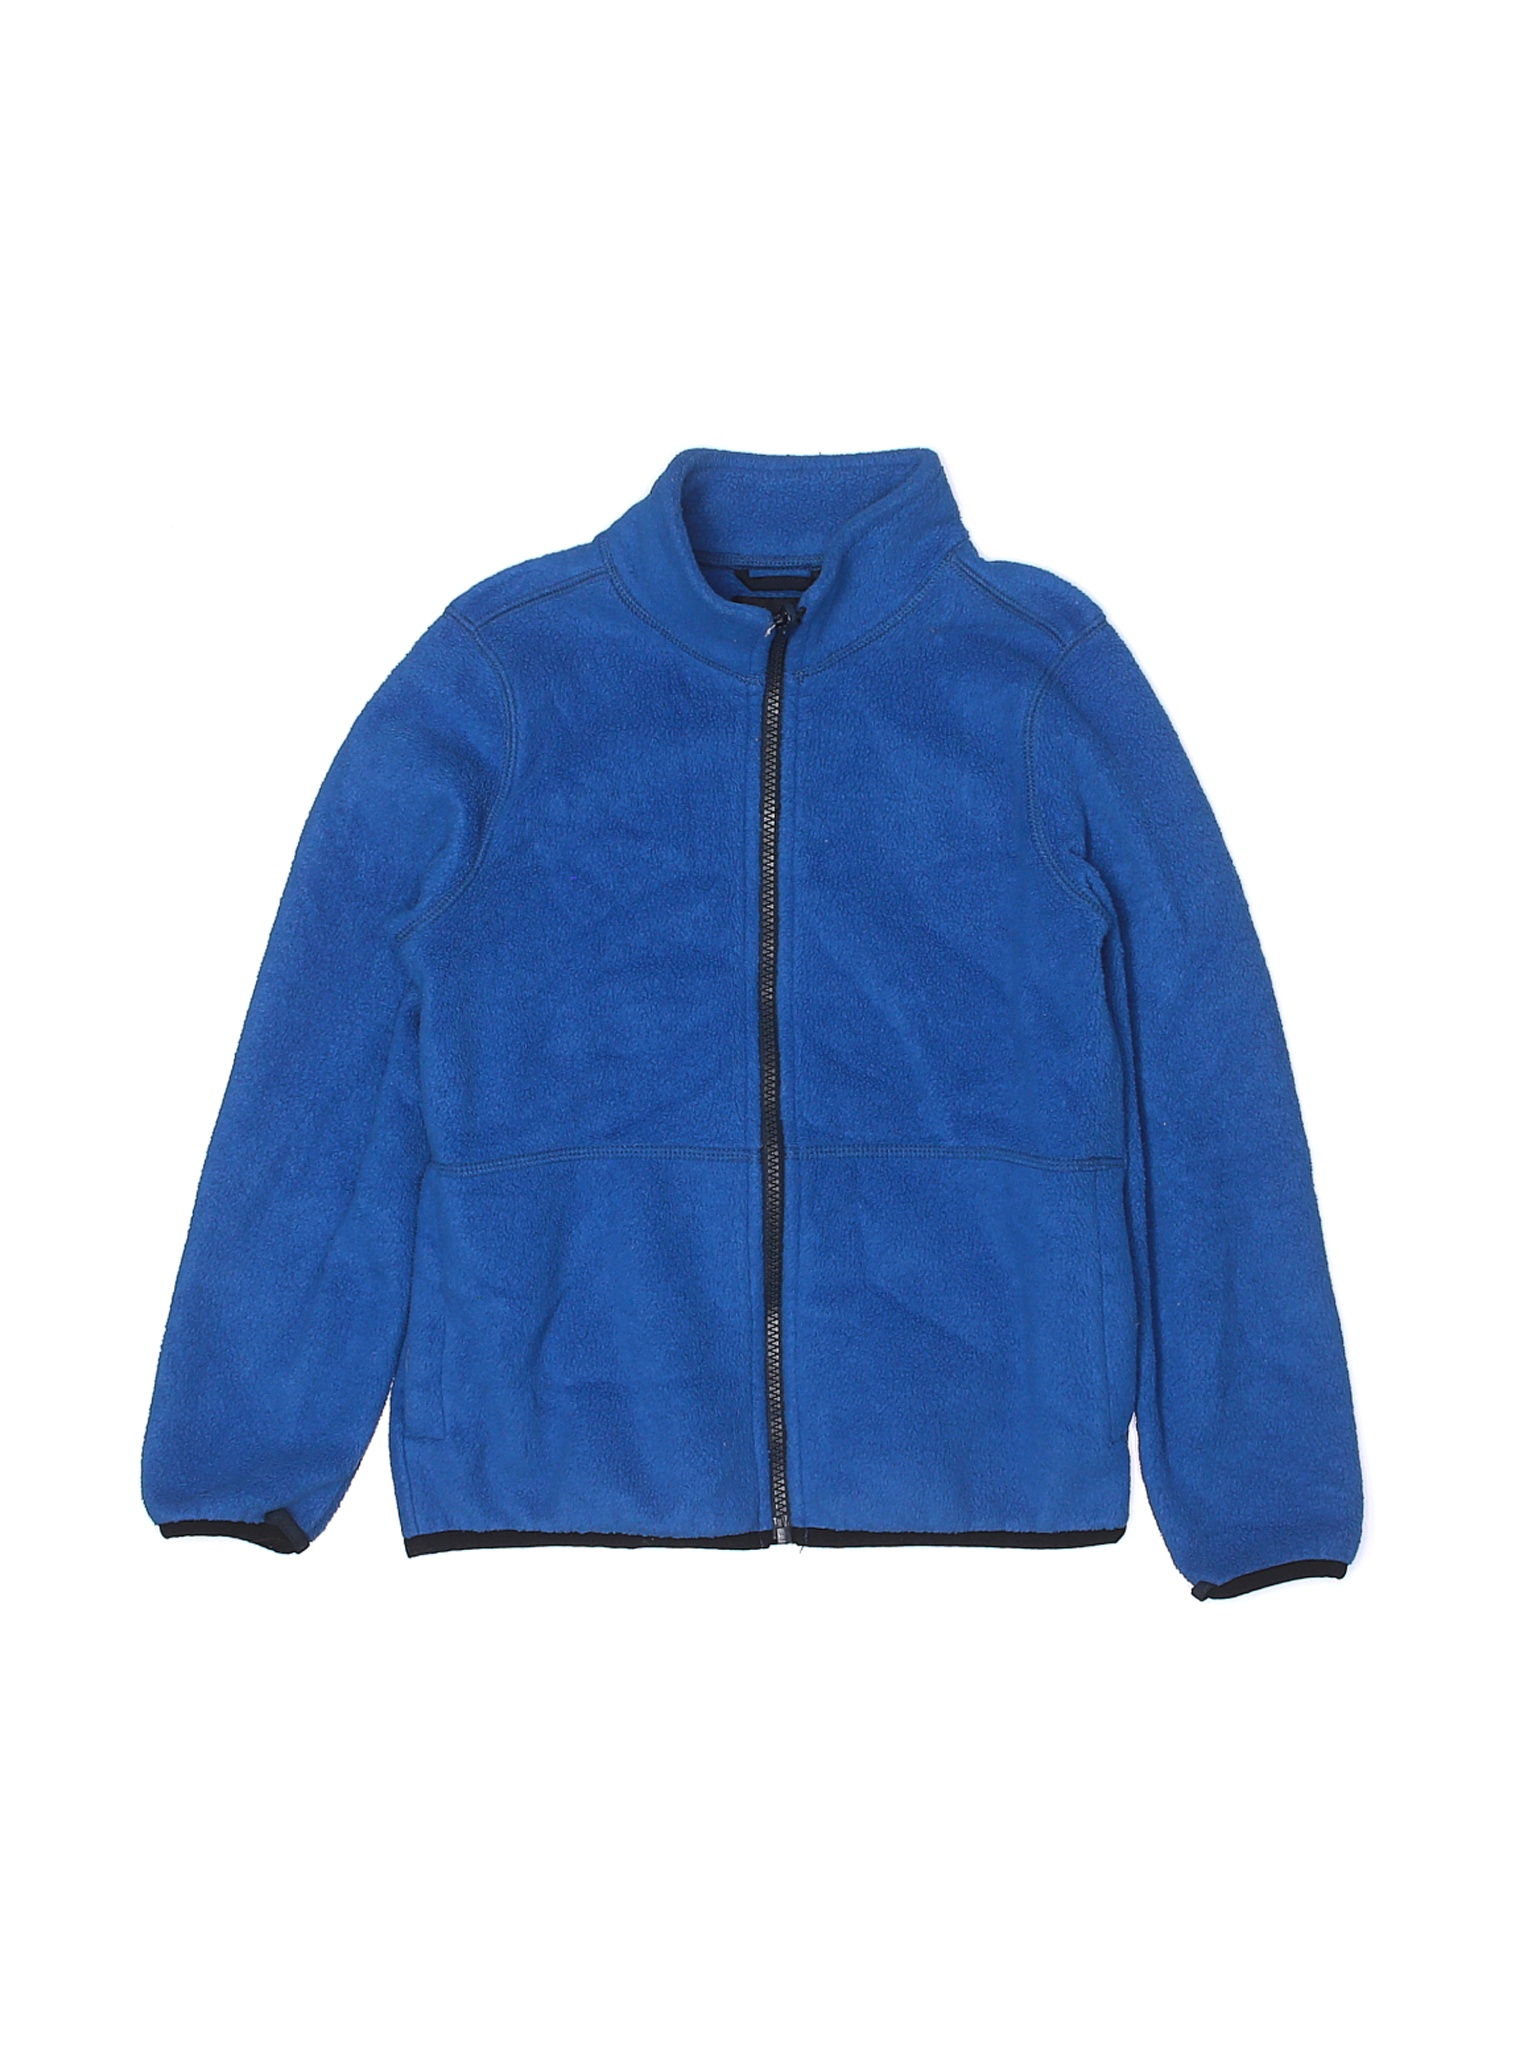 The Children's Place Boys Blue Fleece Jacket 7 | eBay